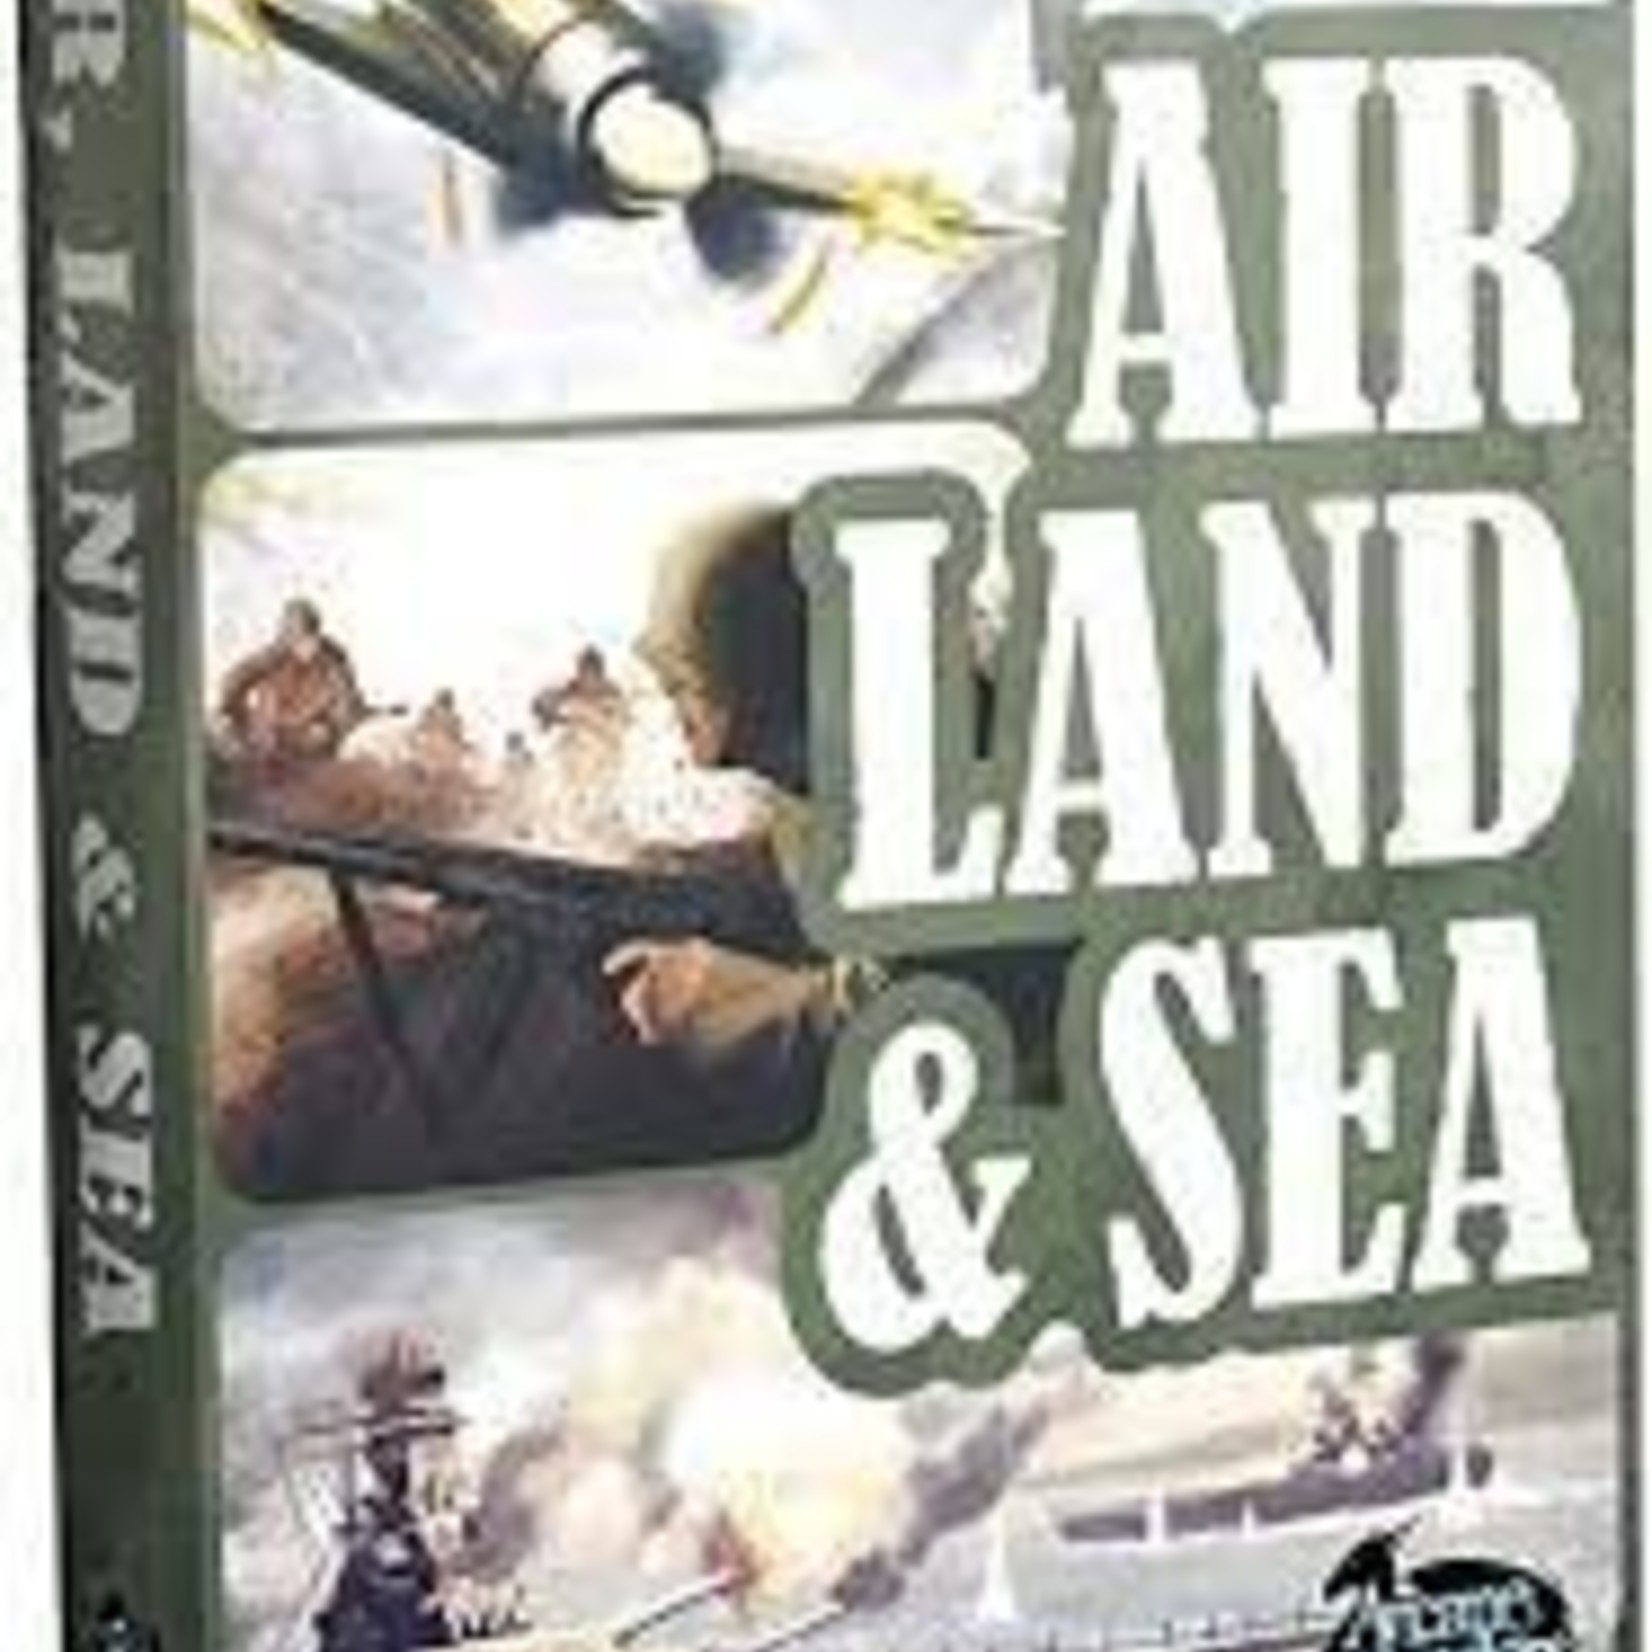 Arcane Wonders Air, Land, & Sea